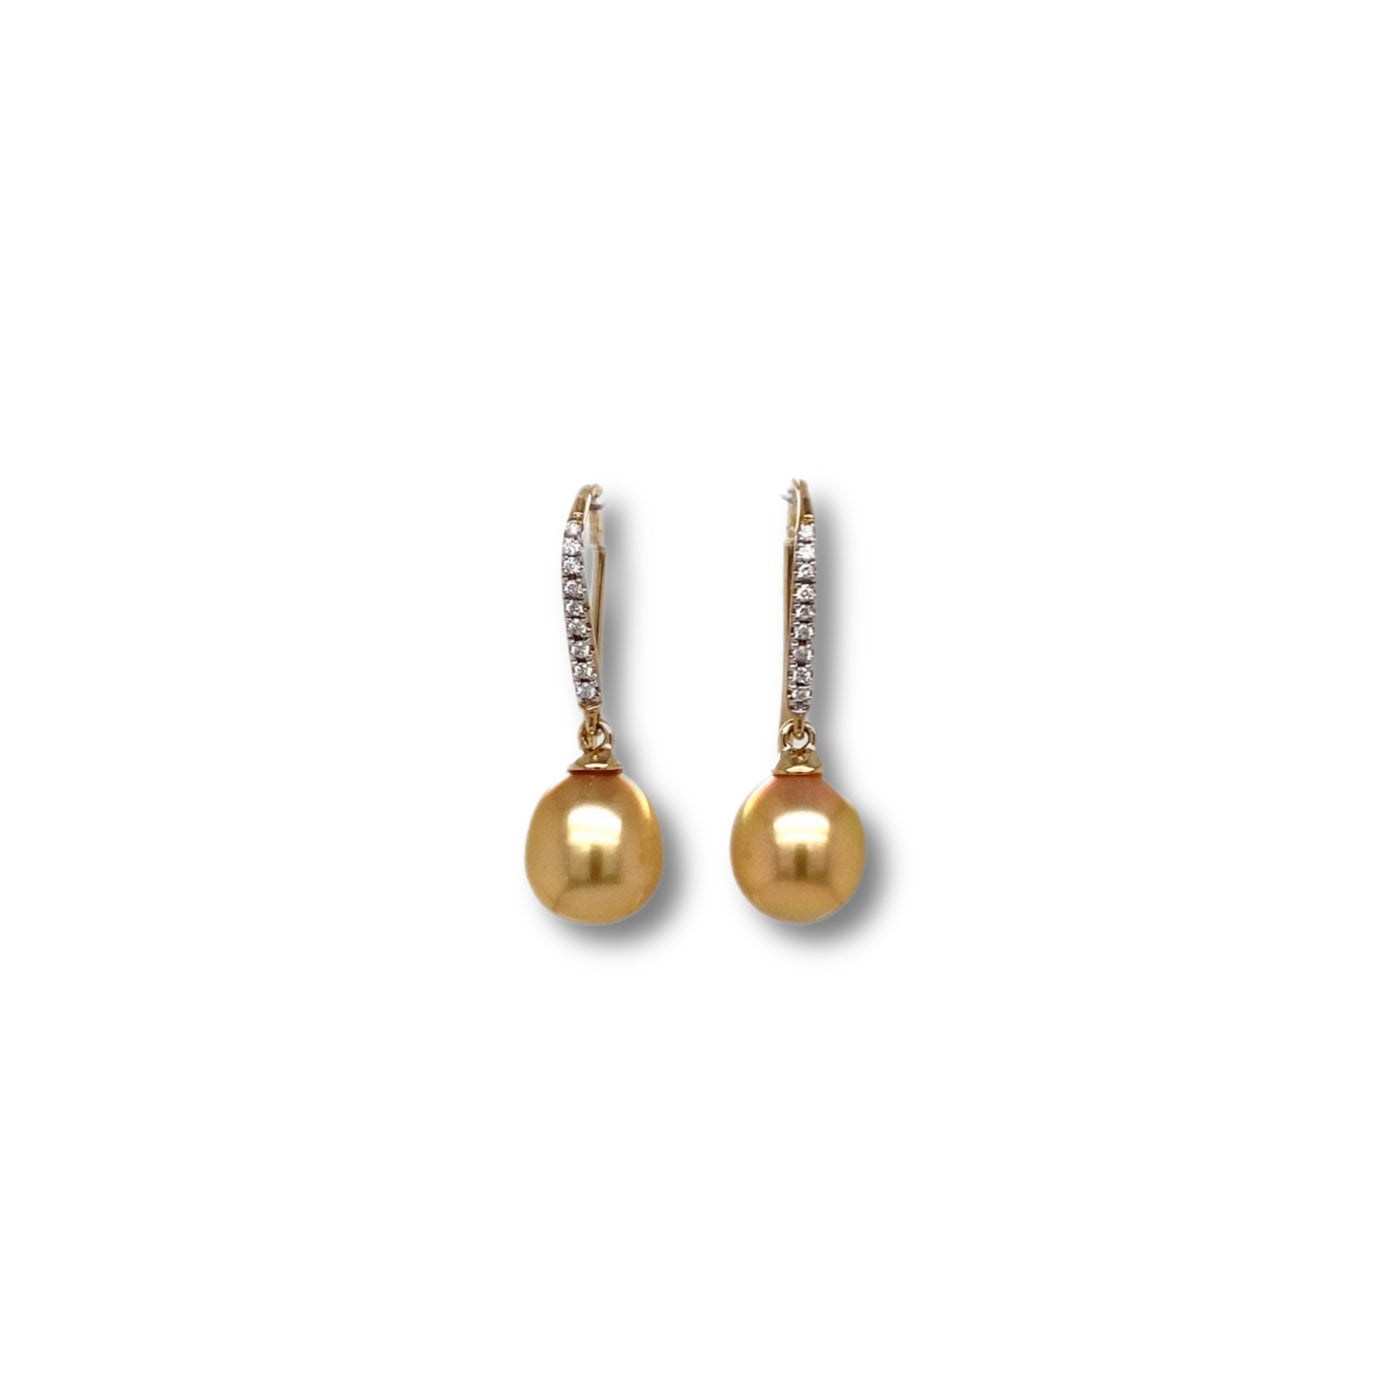 9ct golden South Sea pearl earrings